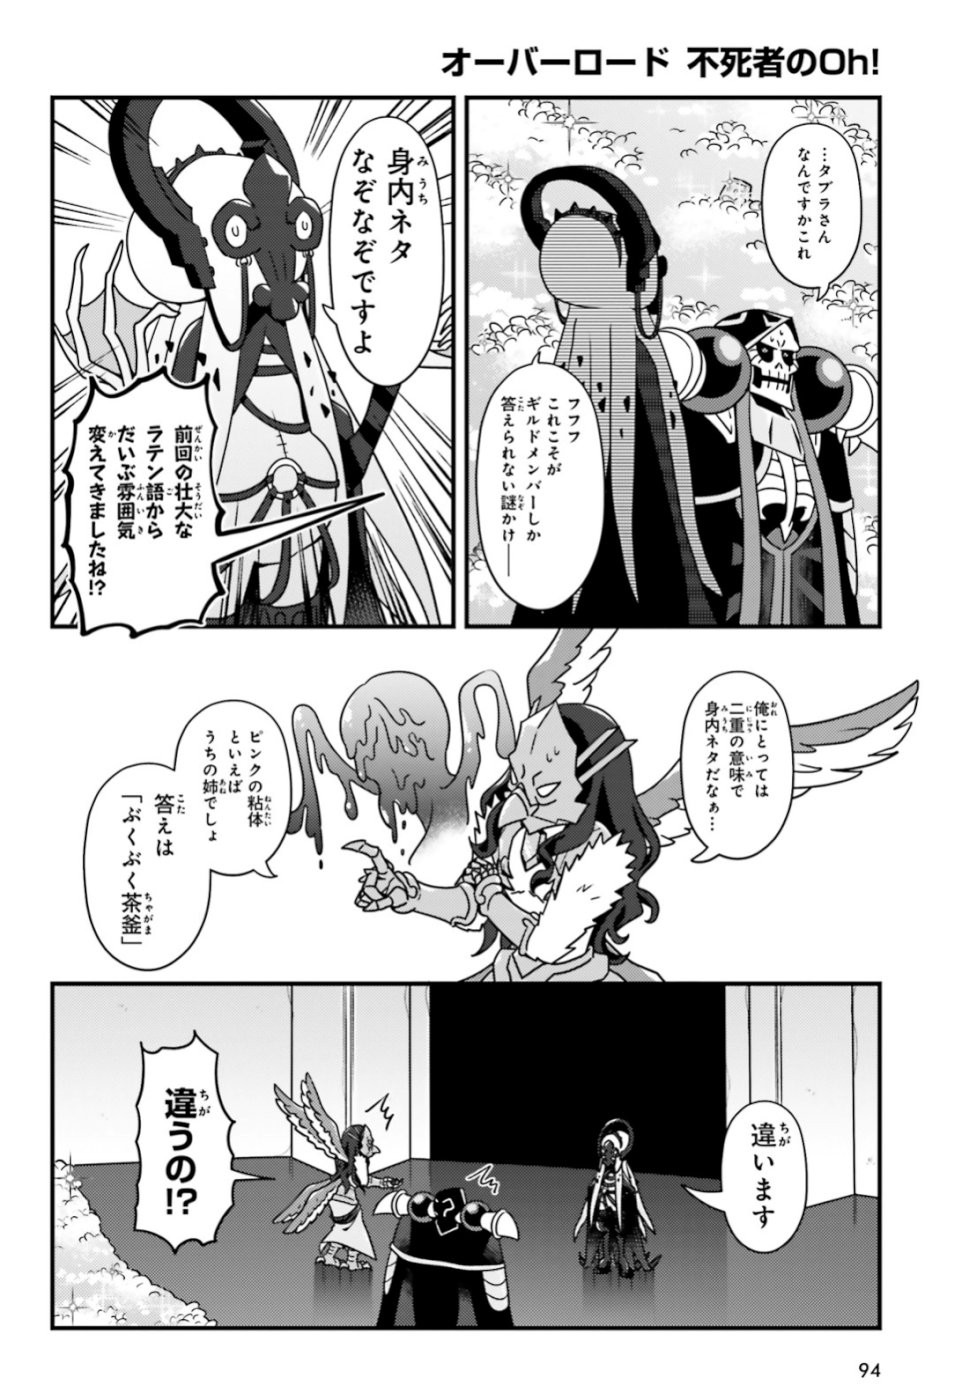 Overlord-Fushisha-no-Oh - Chapter 32-1 - Page 18